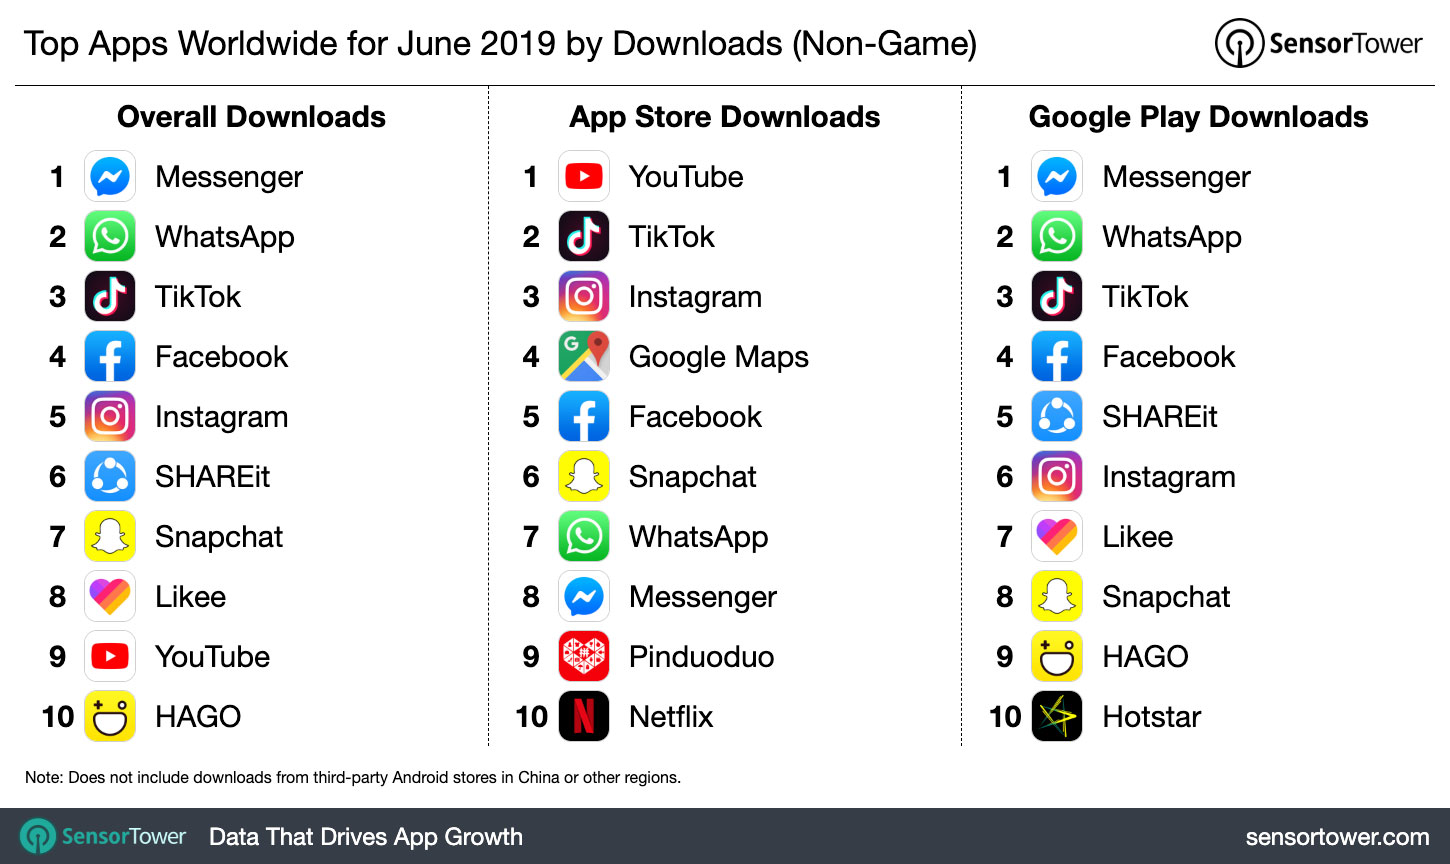 Top Apps Worldwide for June 2019